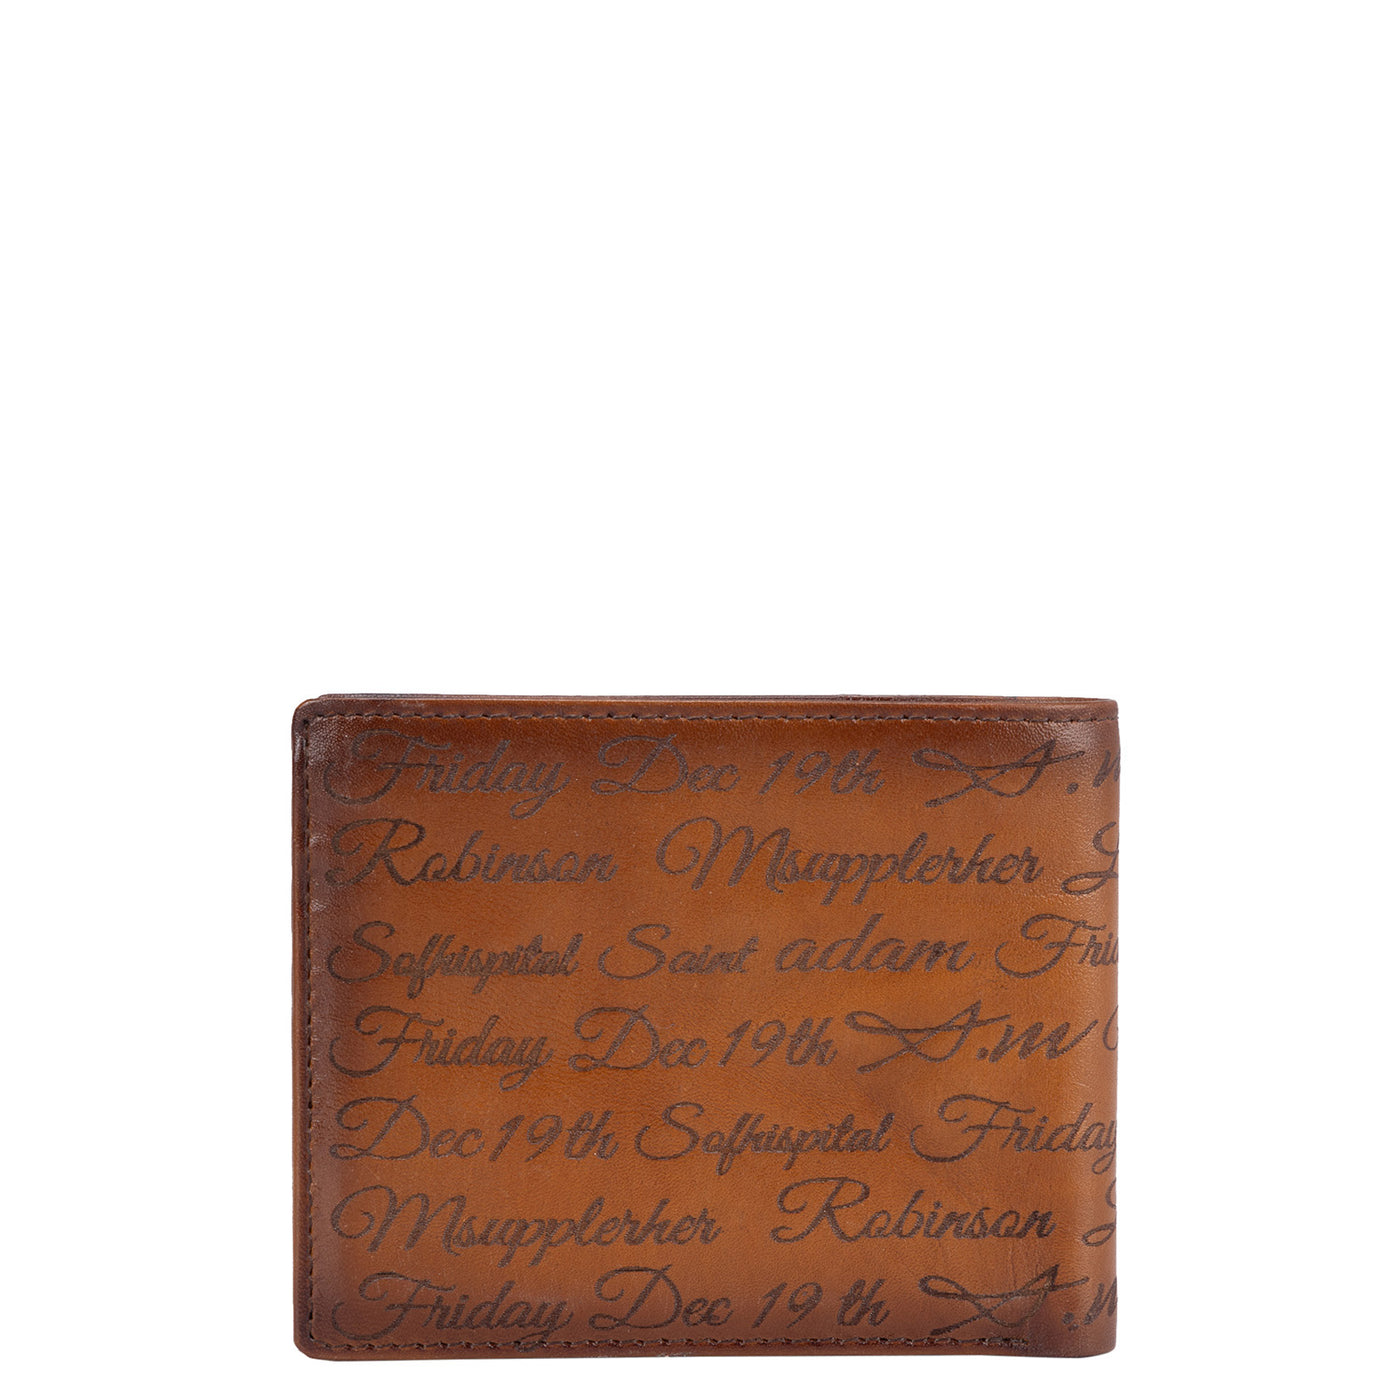 Signato Leather Mens Wallet - Cognac